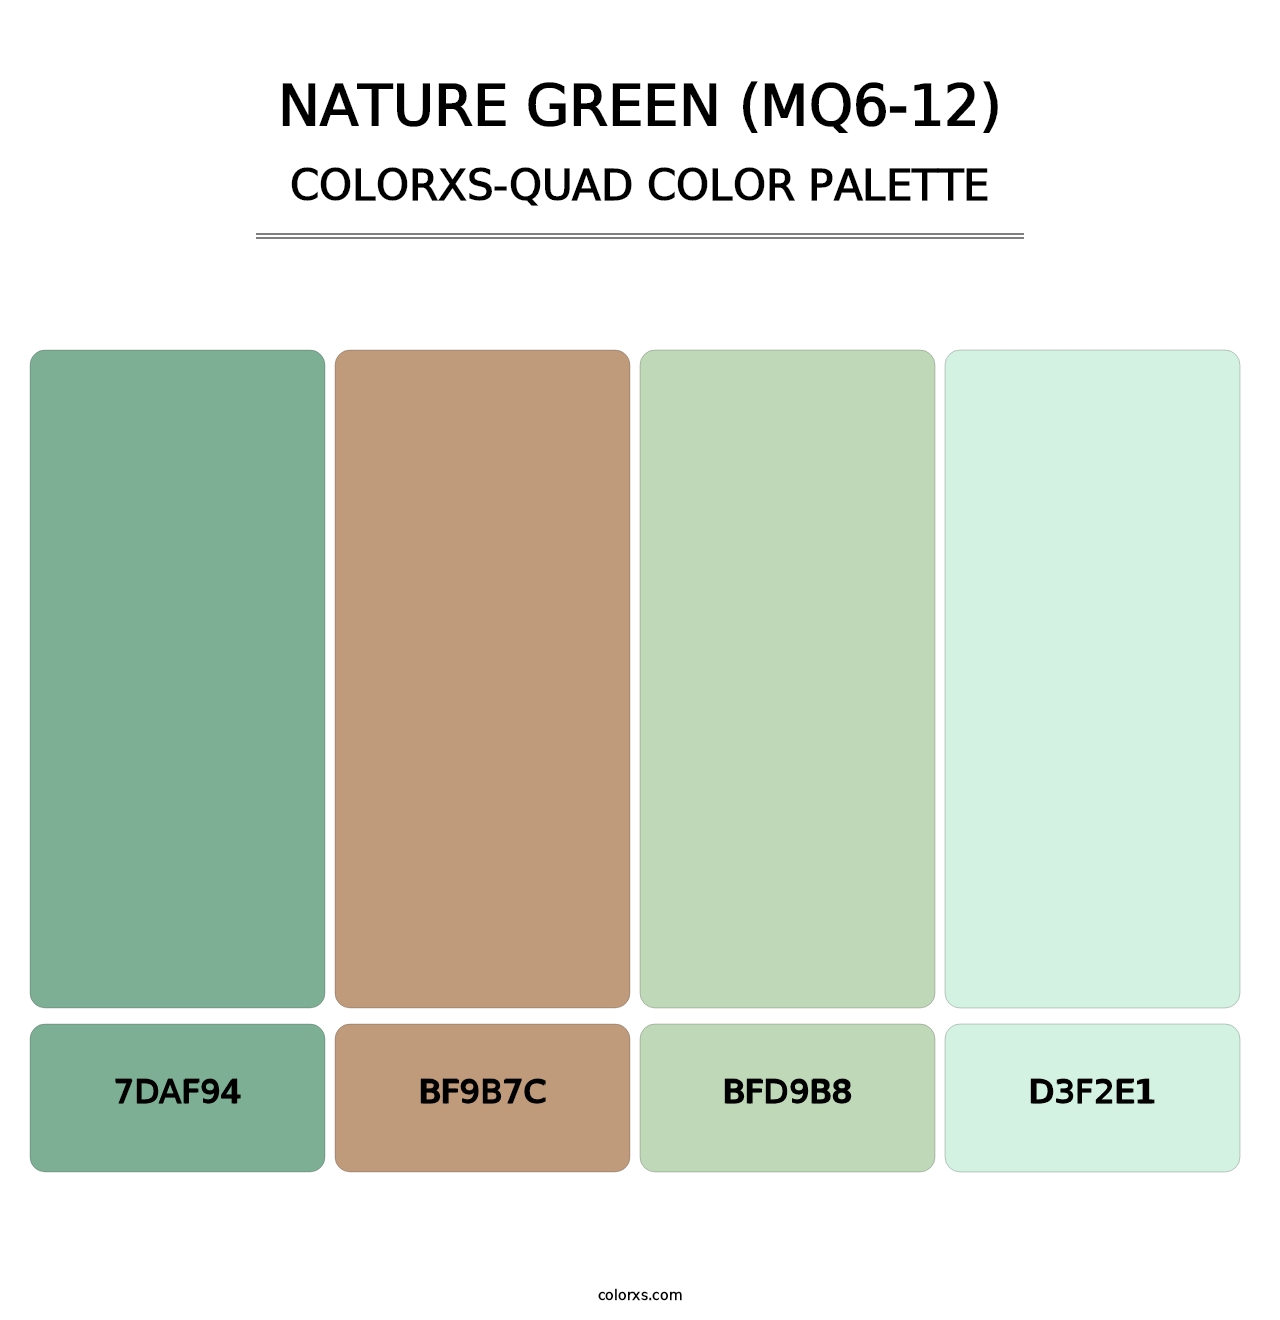 Nature Green (MQ6-12) - Colorxs Quad Palette